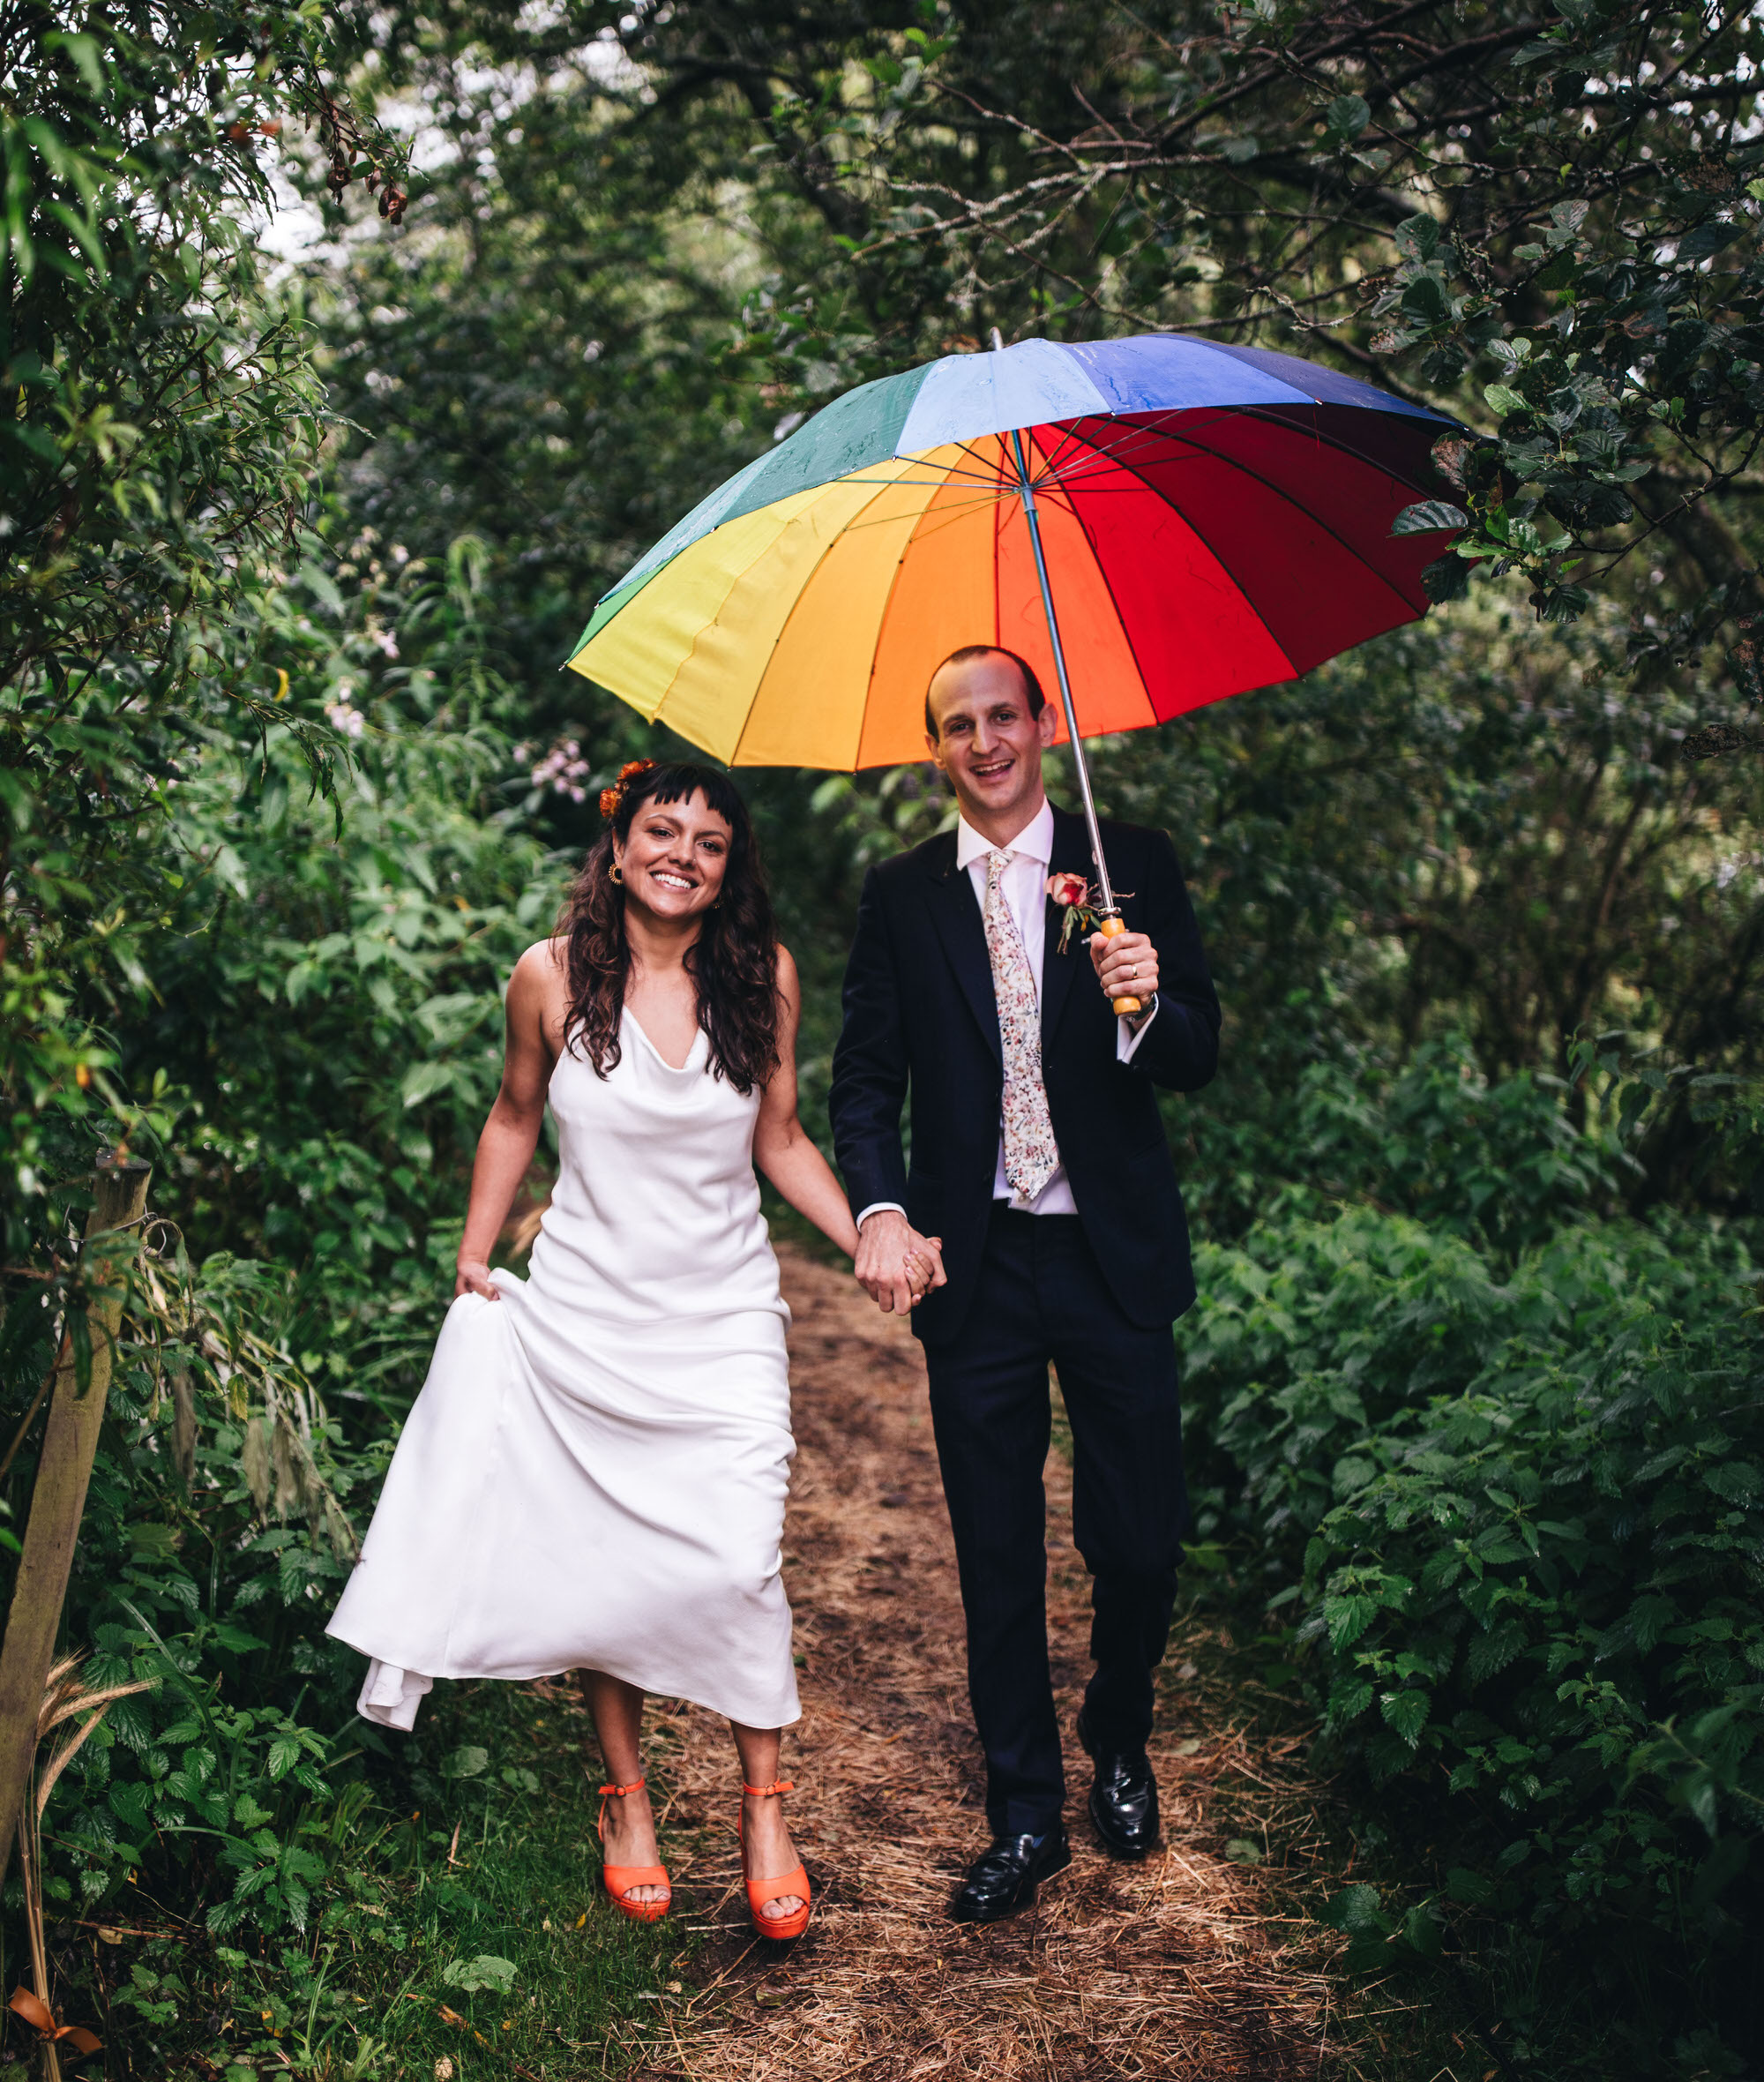 bride and groom walking through trees in the rain, holding rainbow umbrella